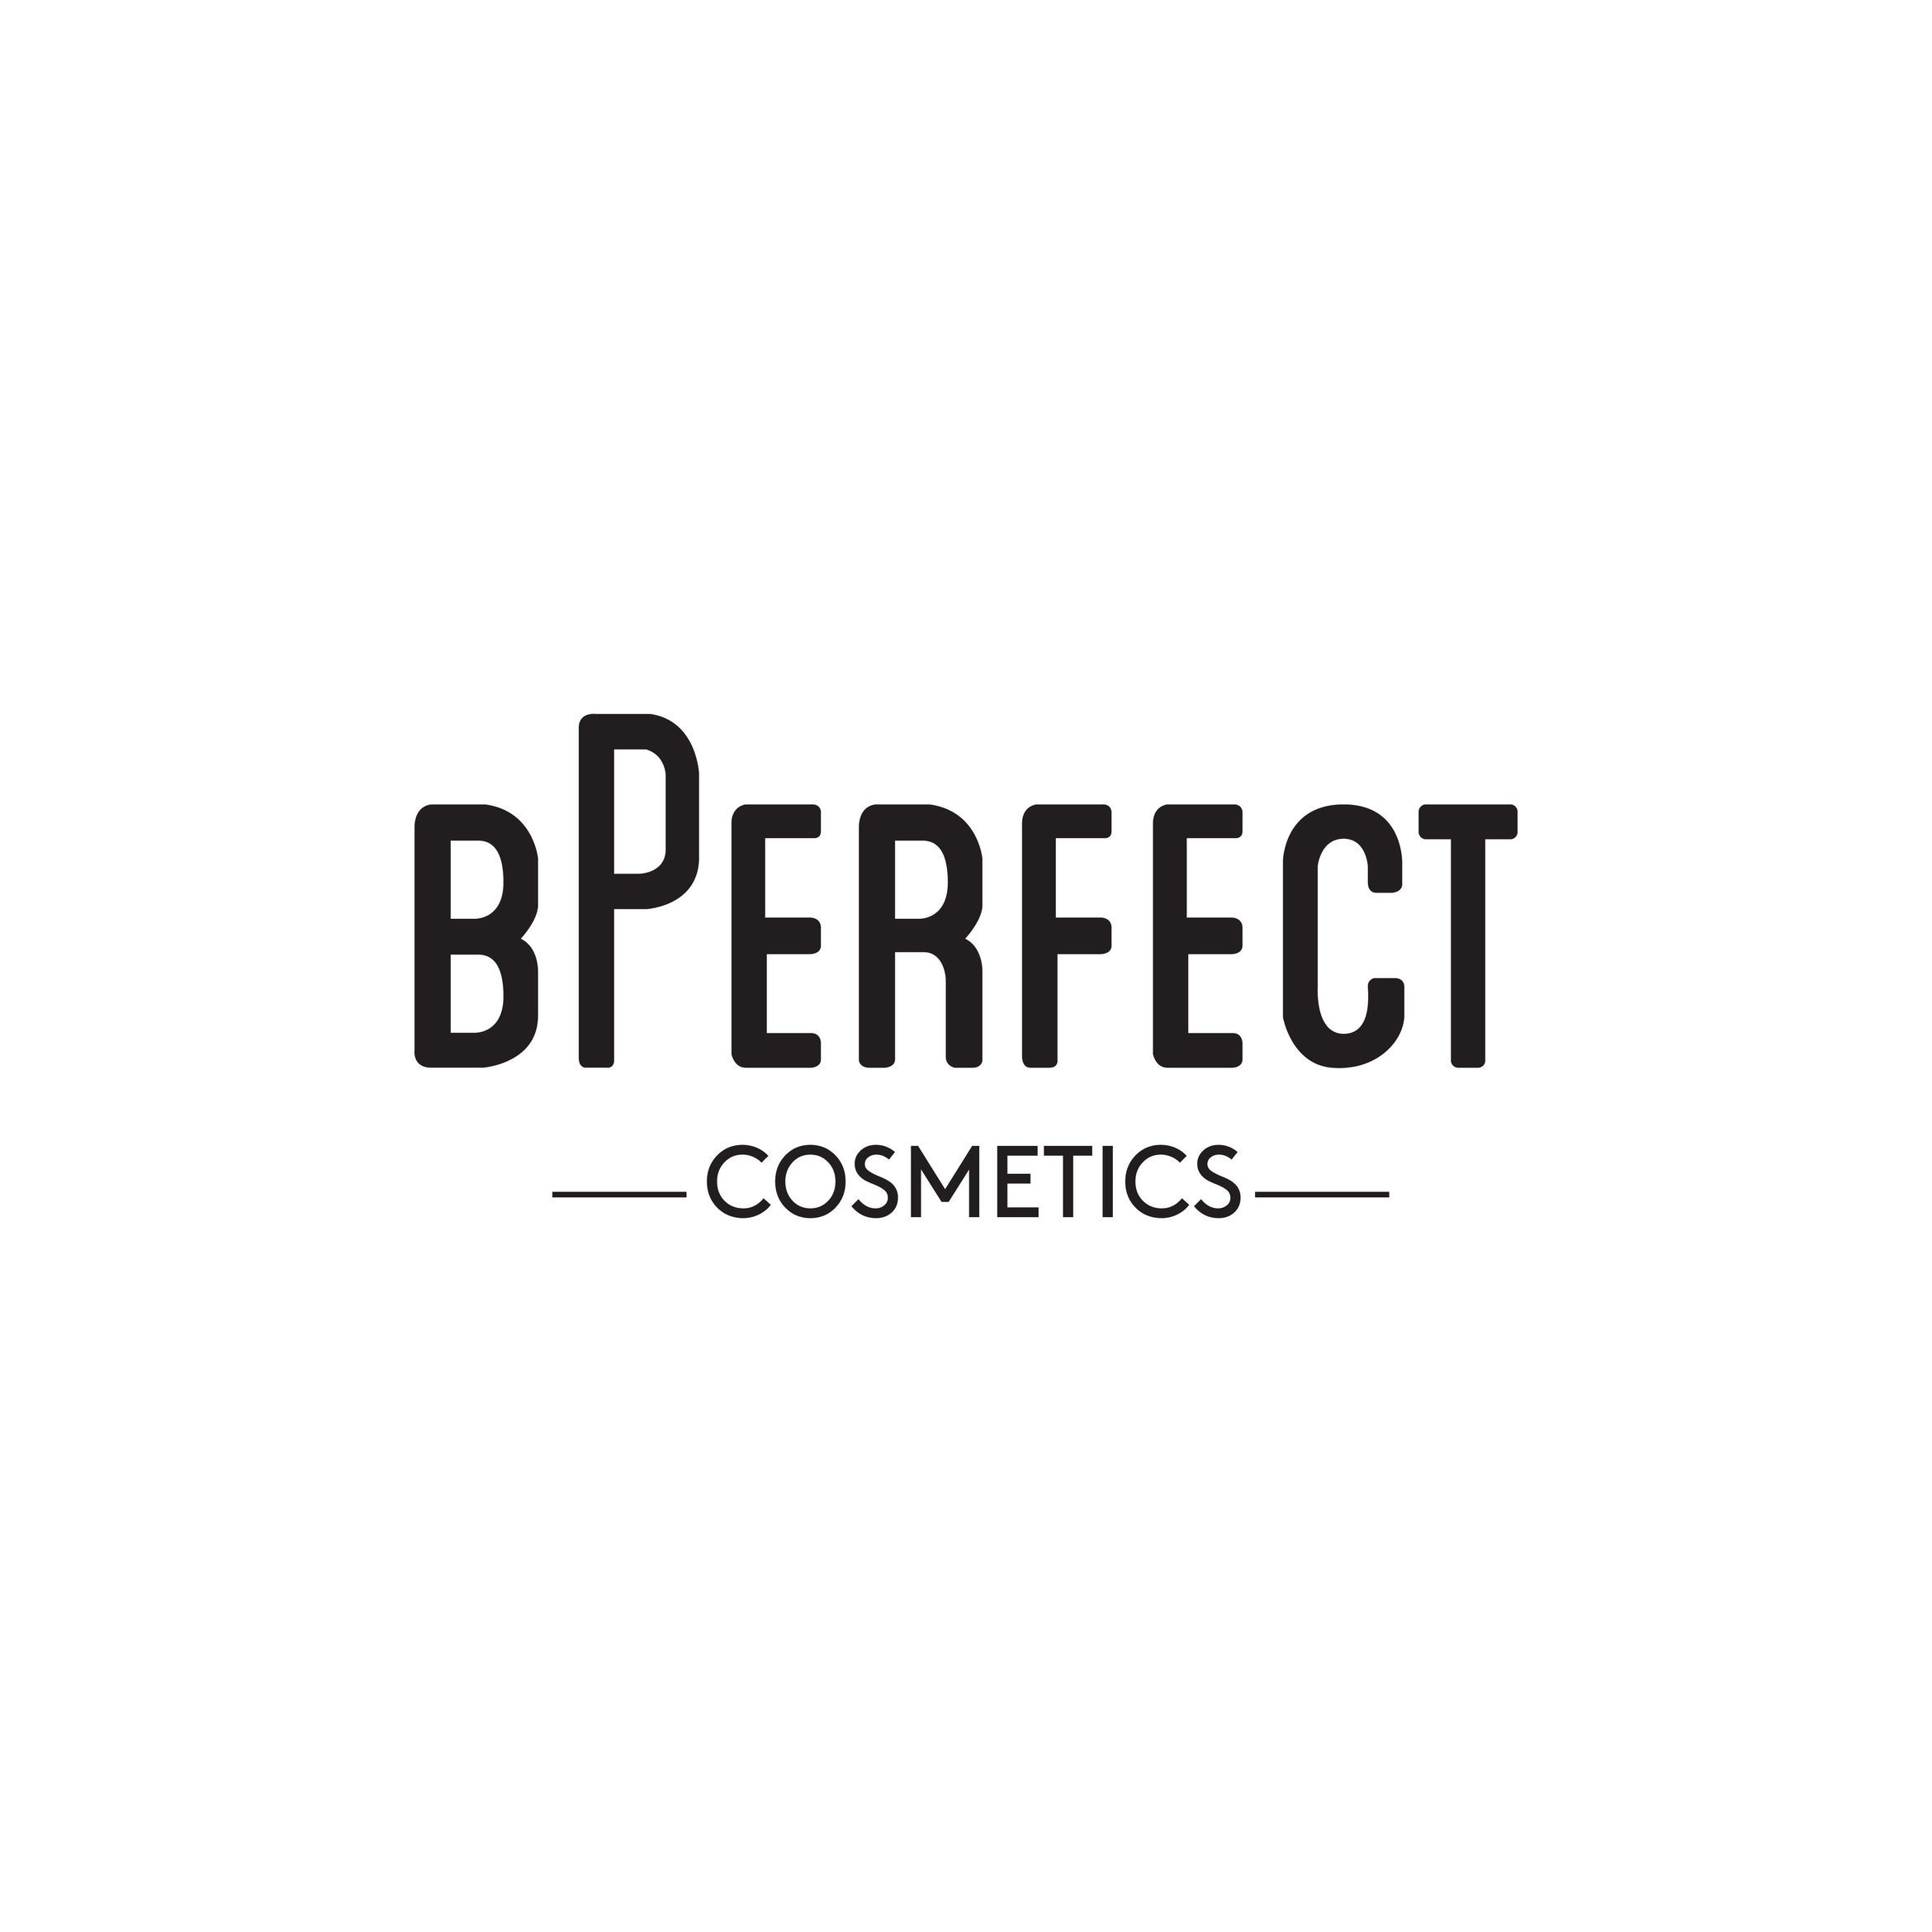 Bperfect Cosmetics Silverburn, Silverburn Shopping Centre, Barrhead Road, G53 6AG, Glasgow